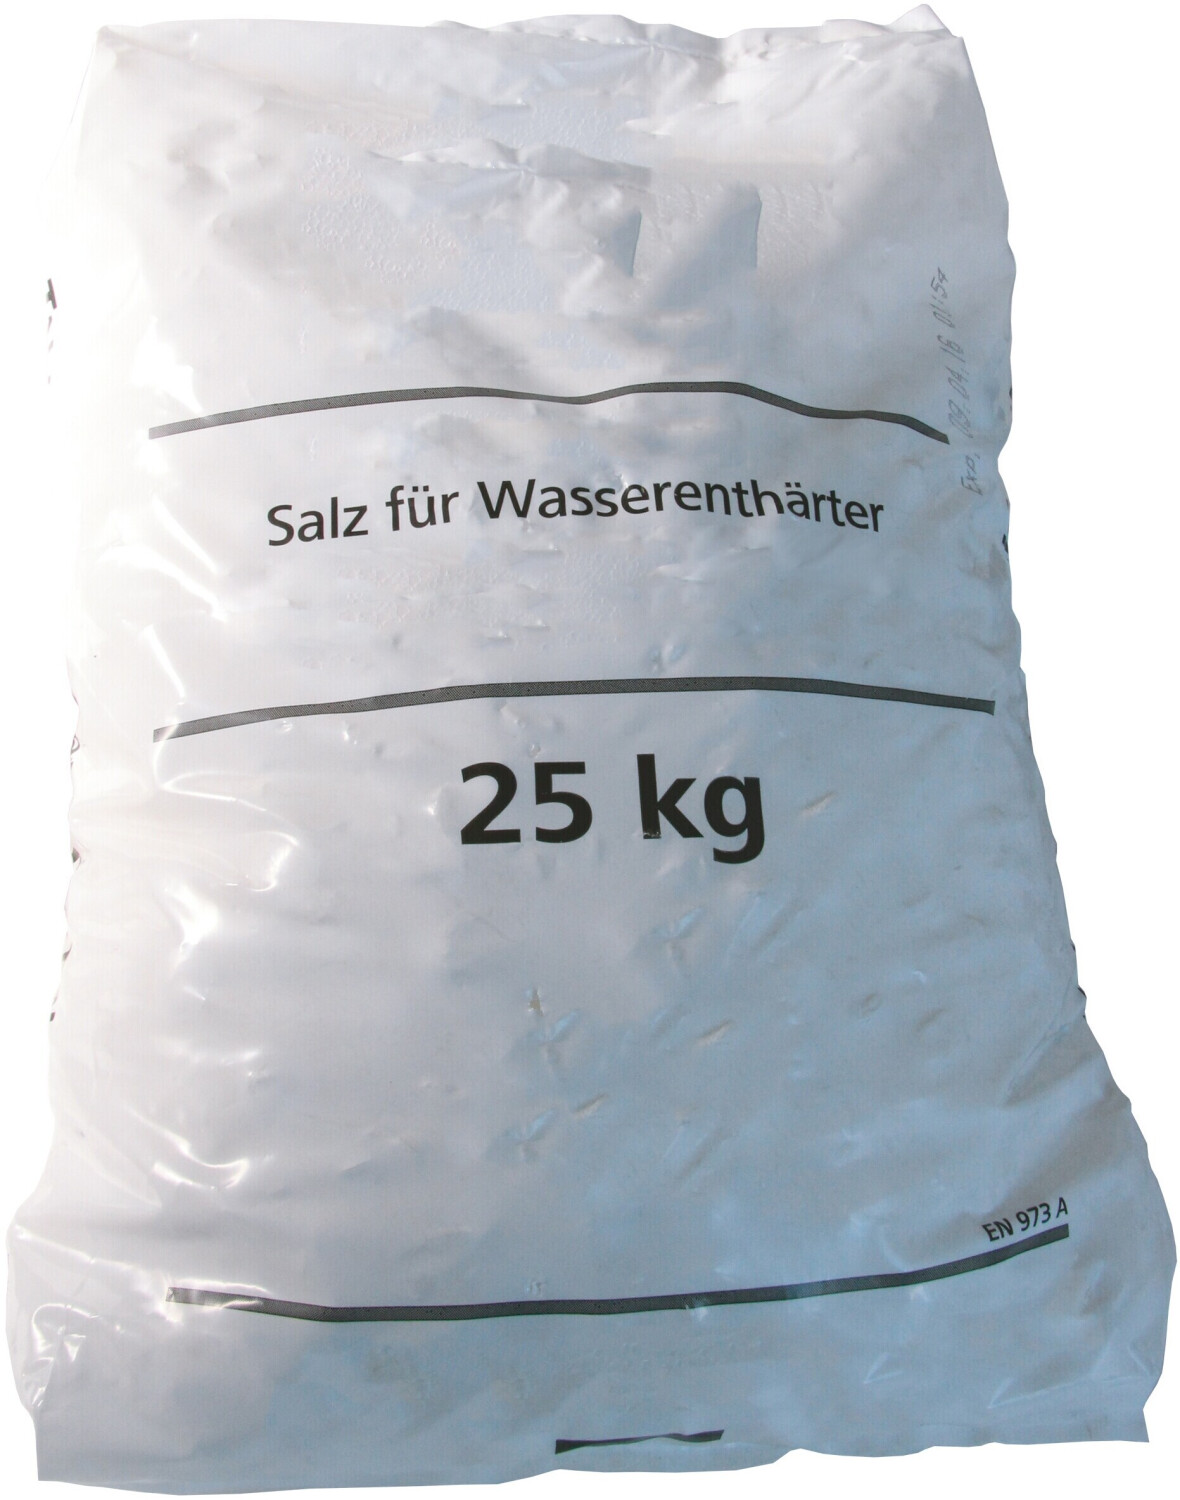 Regeneriersalz zum Spitzenpreis, 25 kg Sack – Kerscher Online-Shop